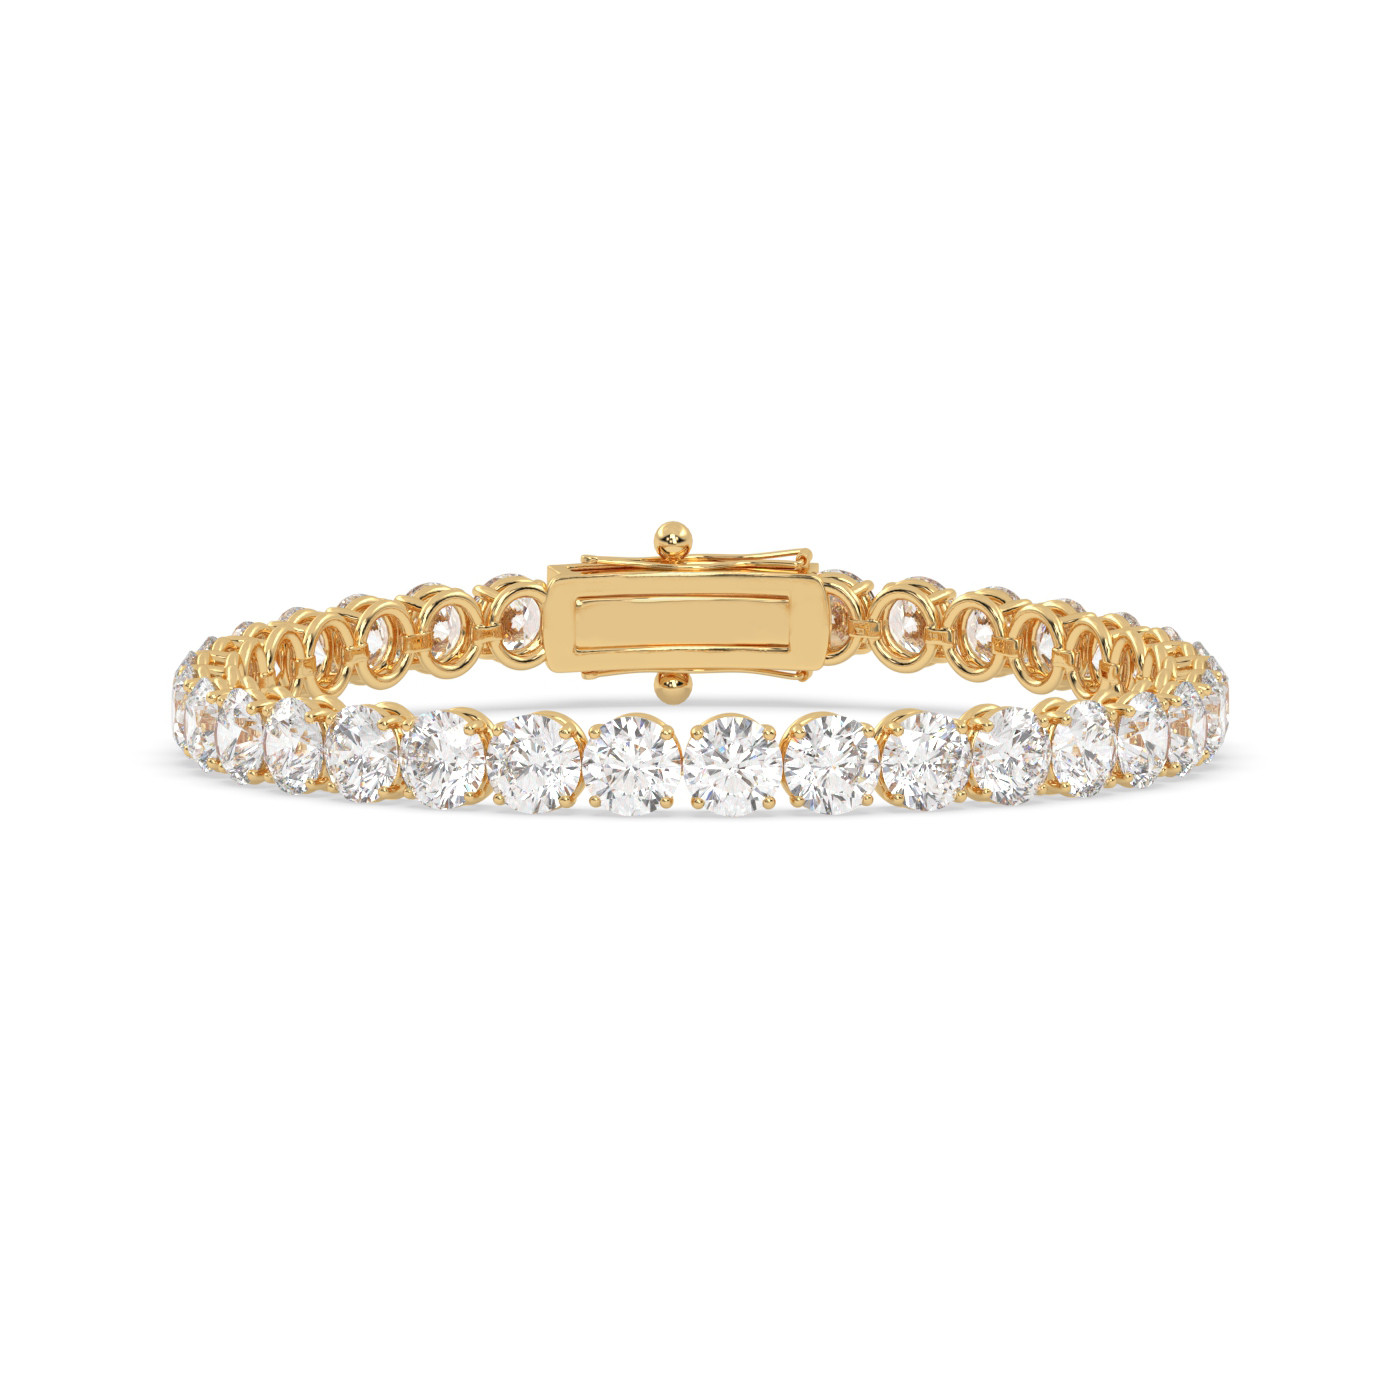 18k yellow gold 10 carat round diamond tennis bracelet with traditional lock sytem Photos & images